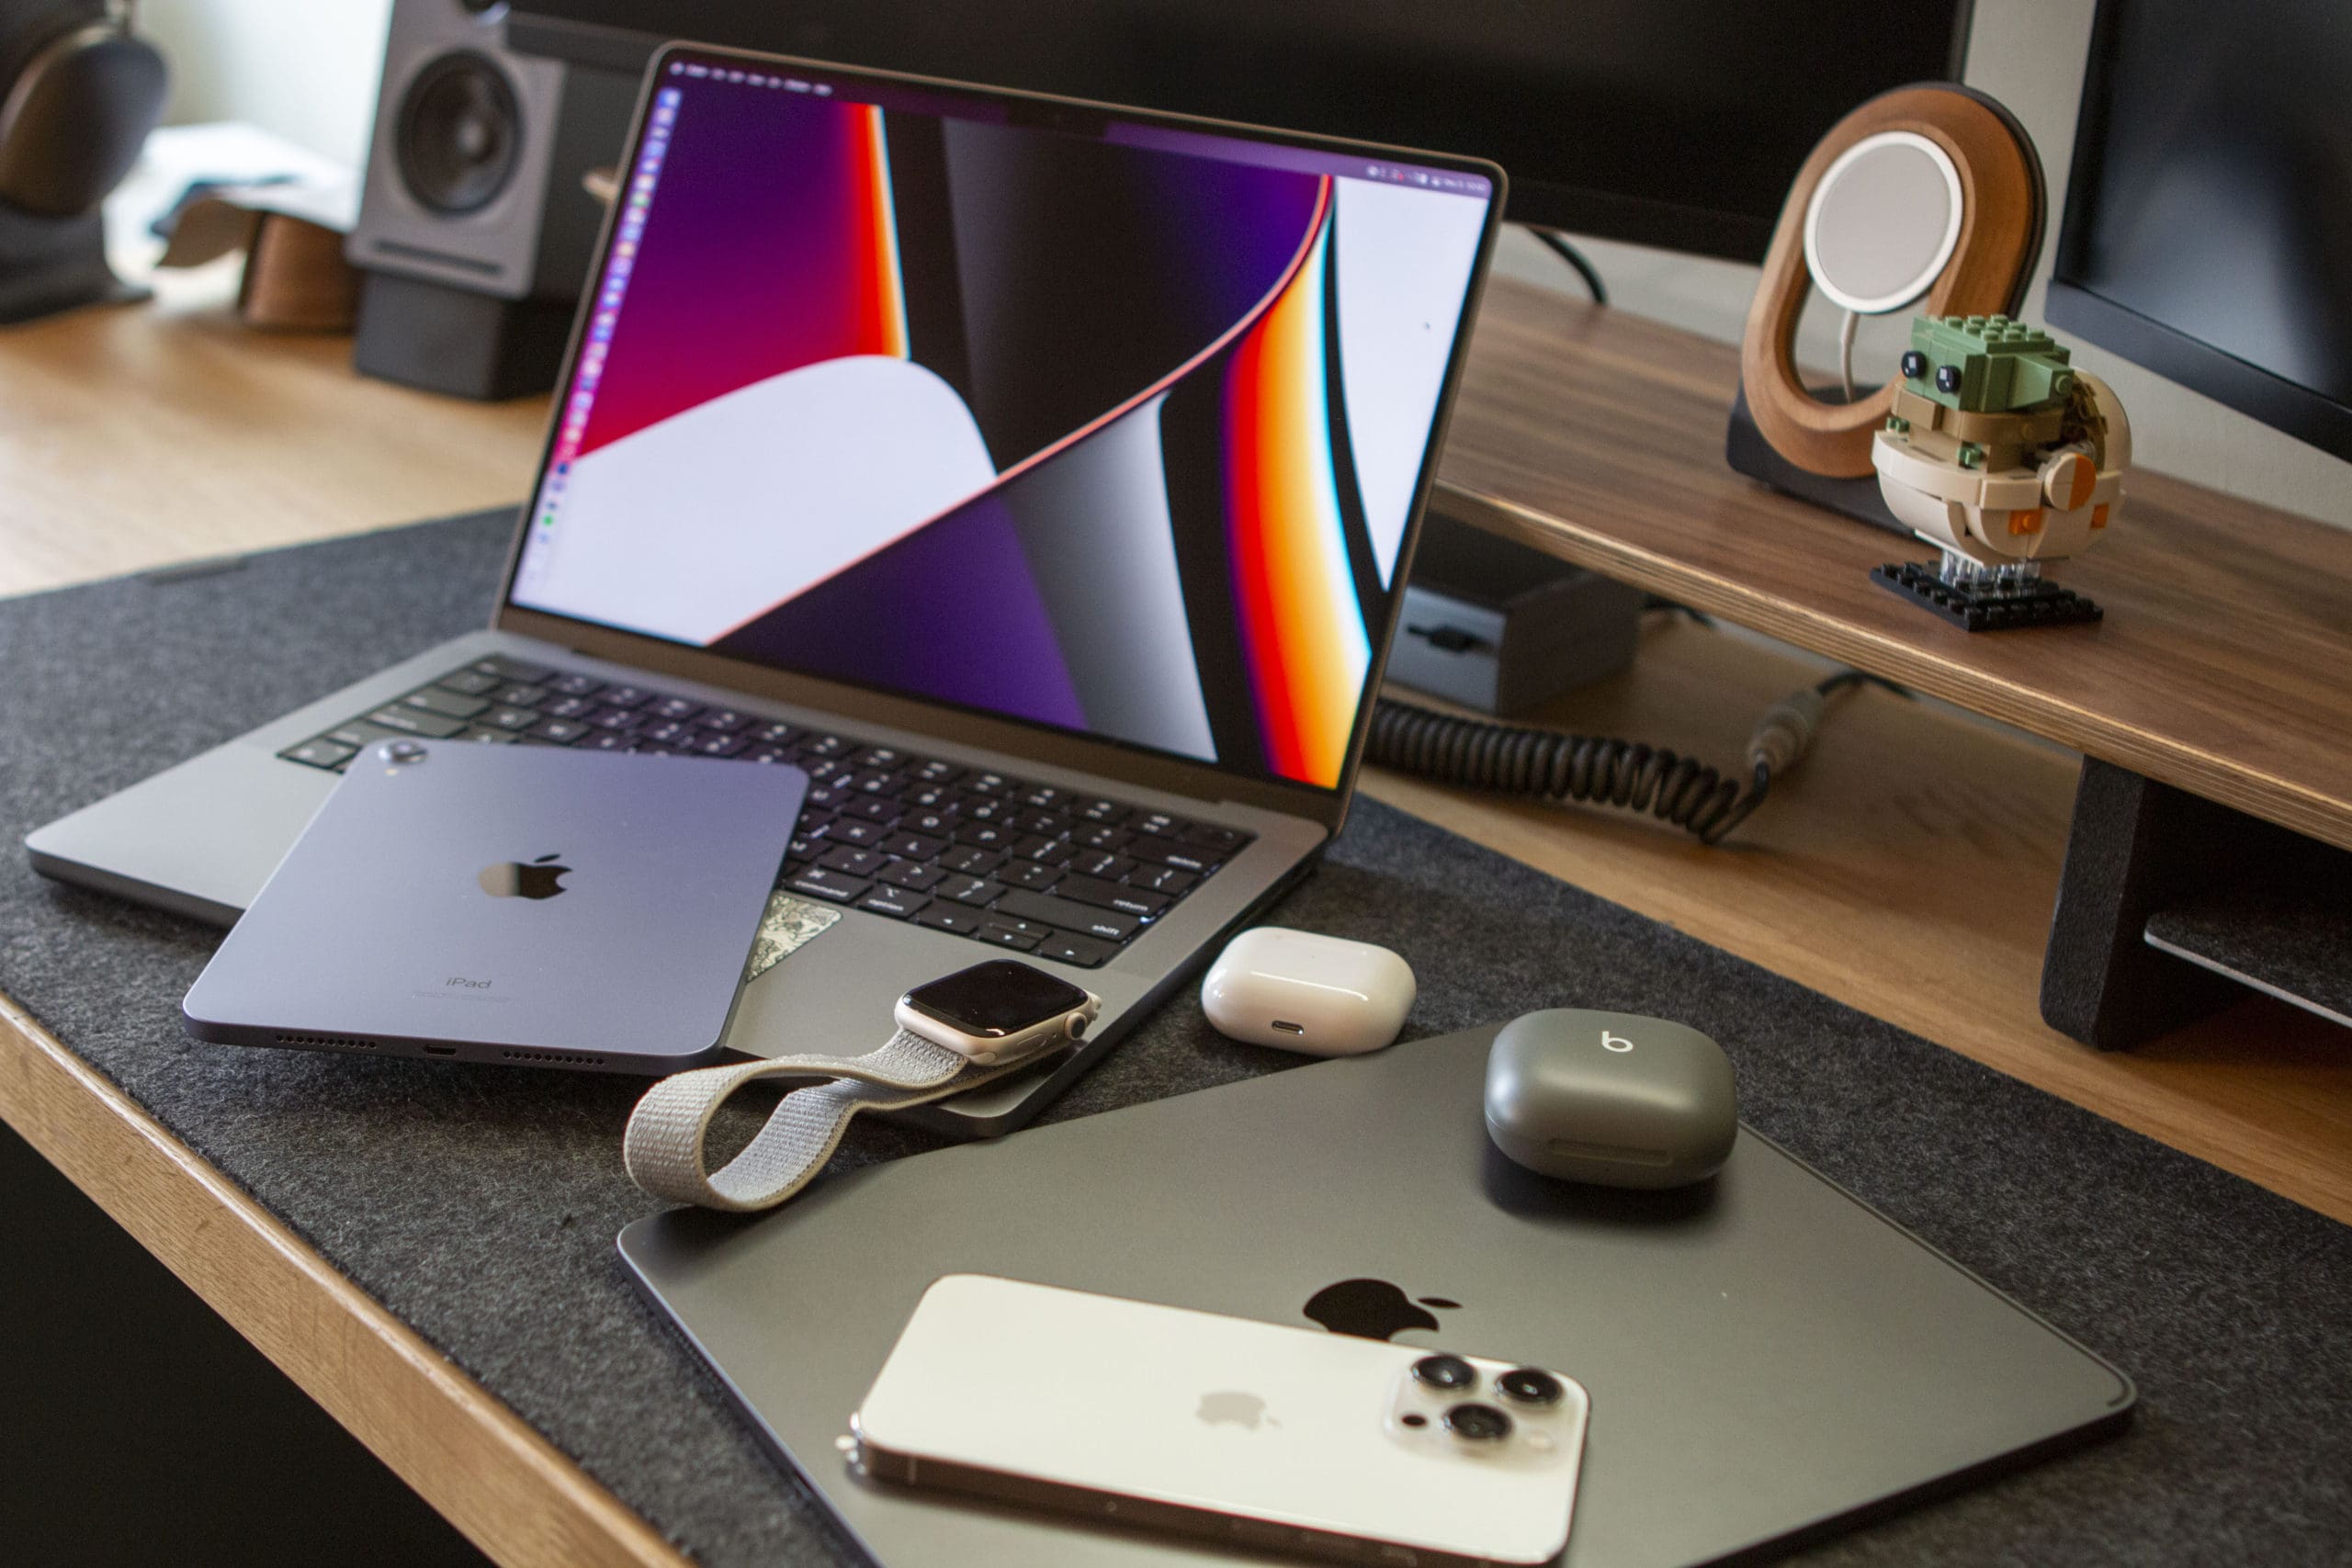 can you fix apple mac pro desktop